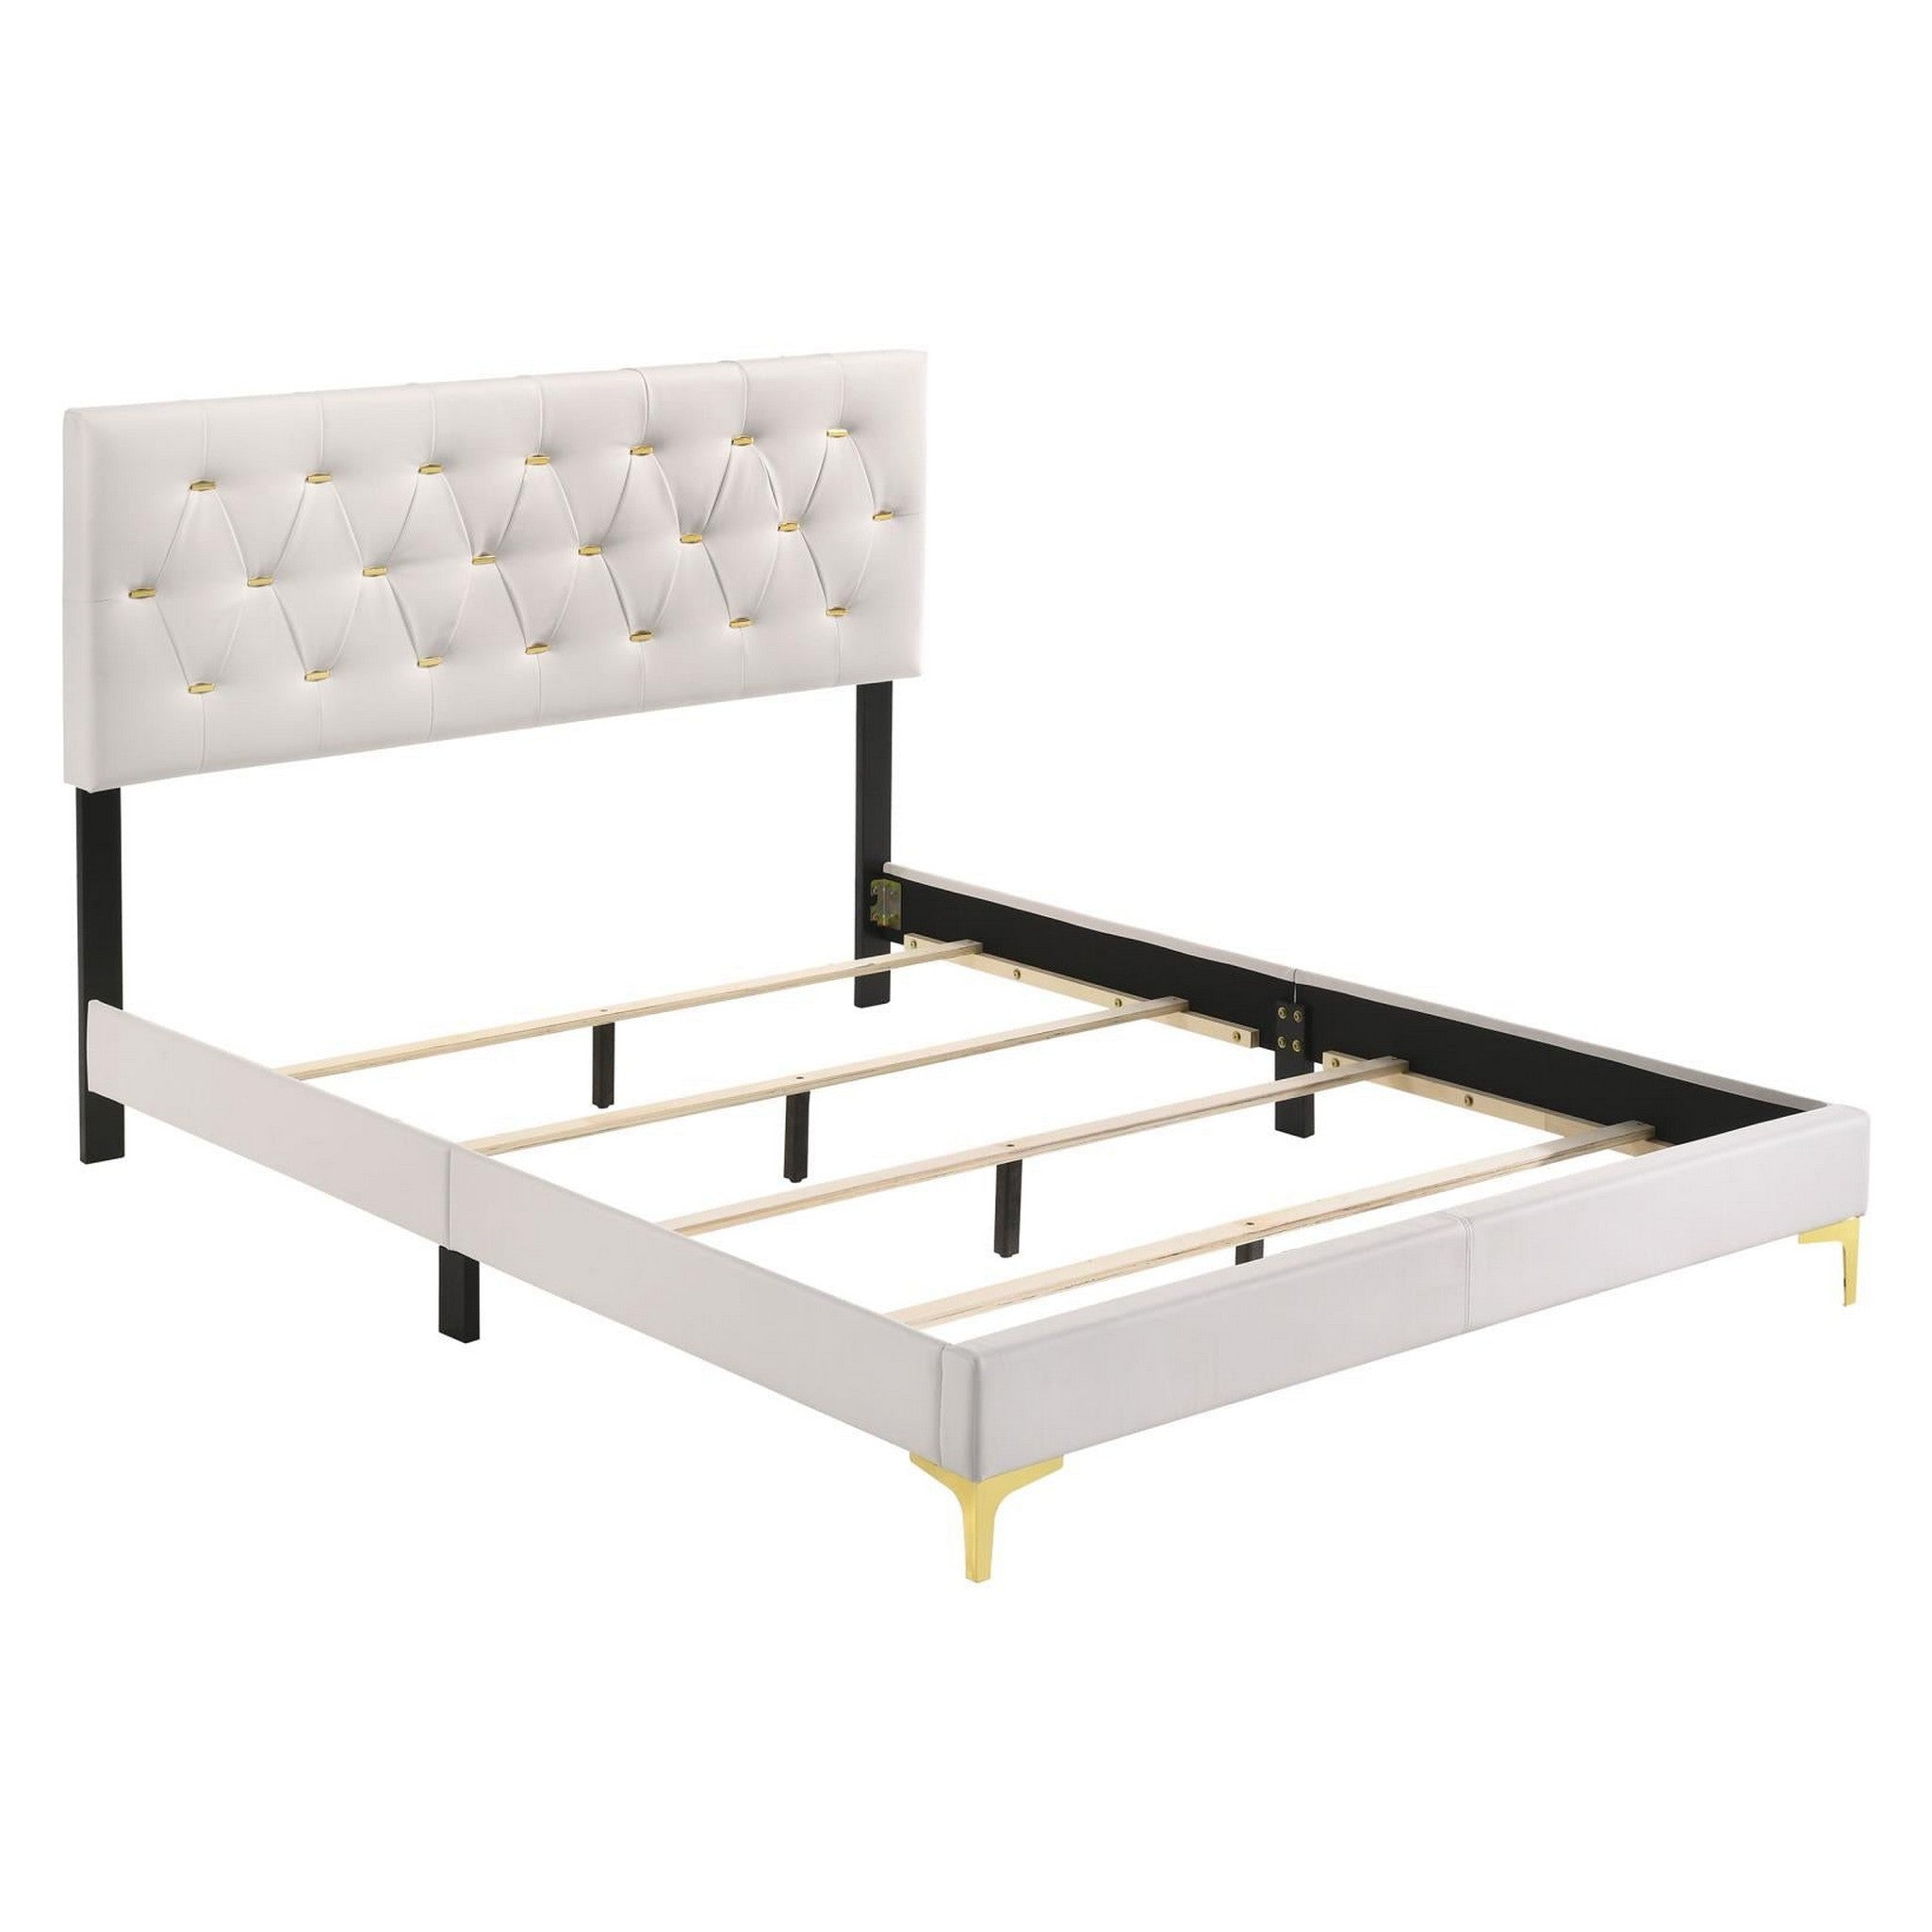 Kendall 4-piece California King Bedroom Set White 224401KW-S4